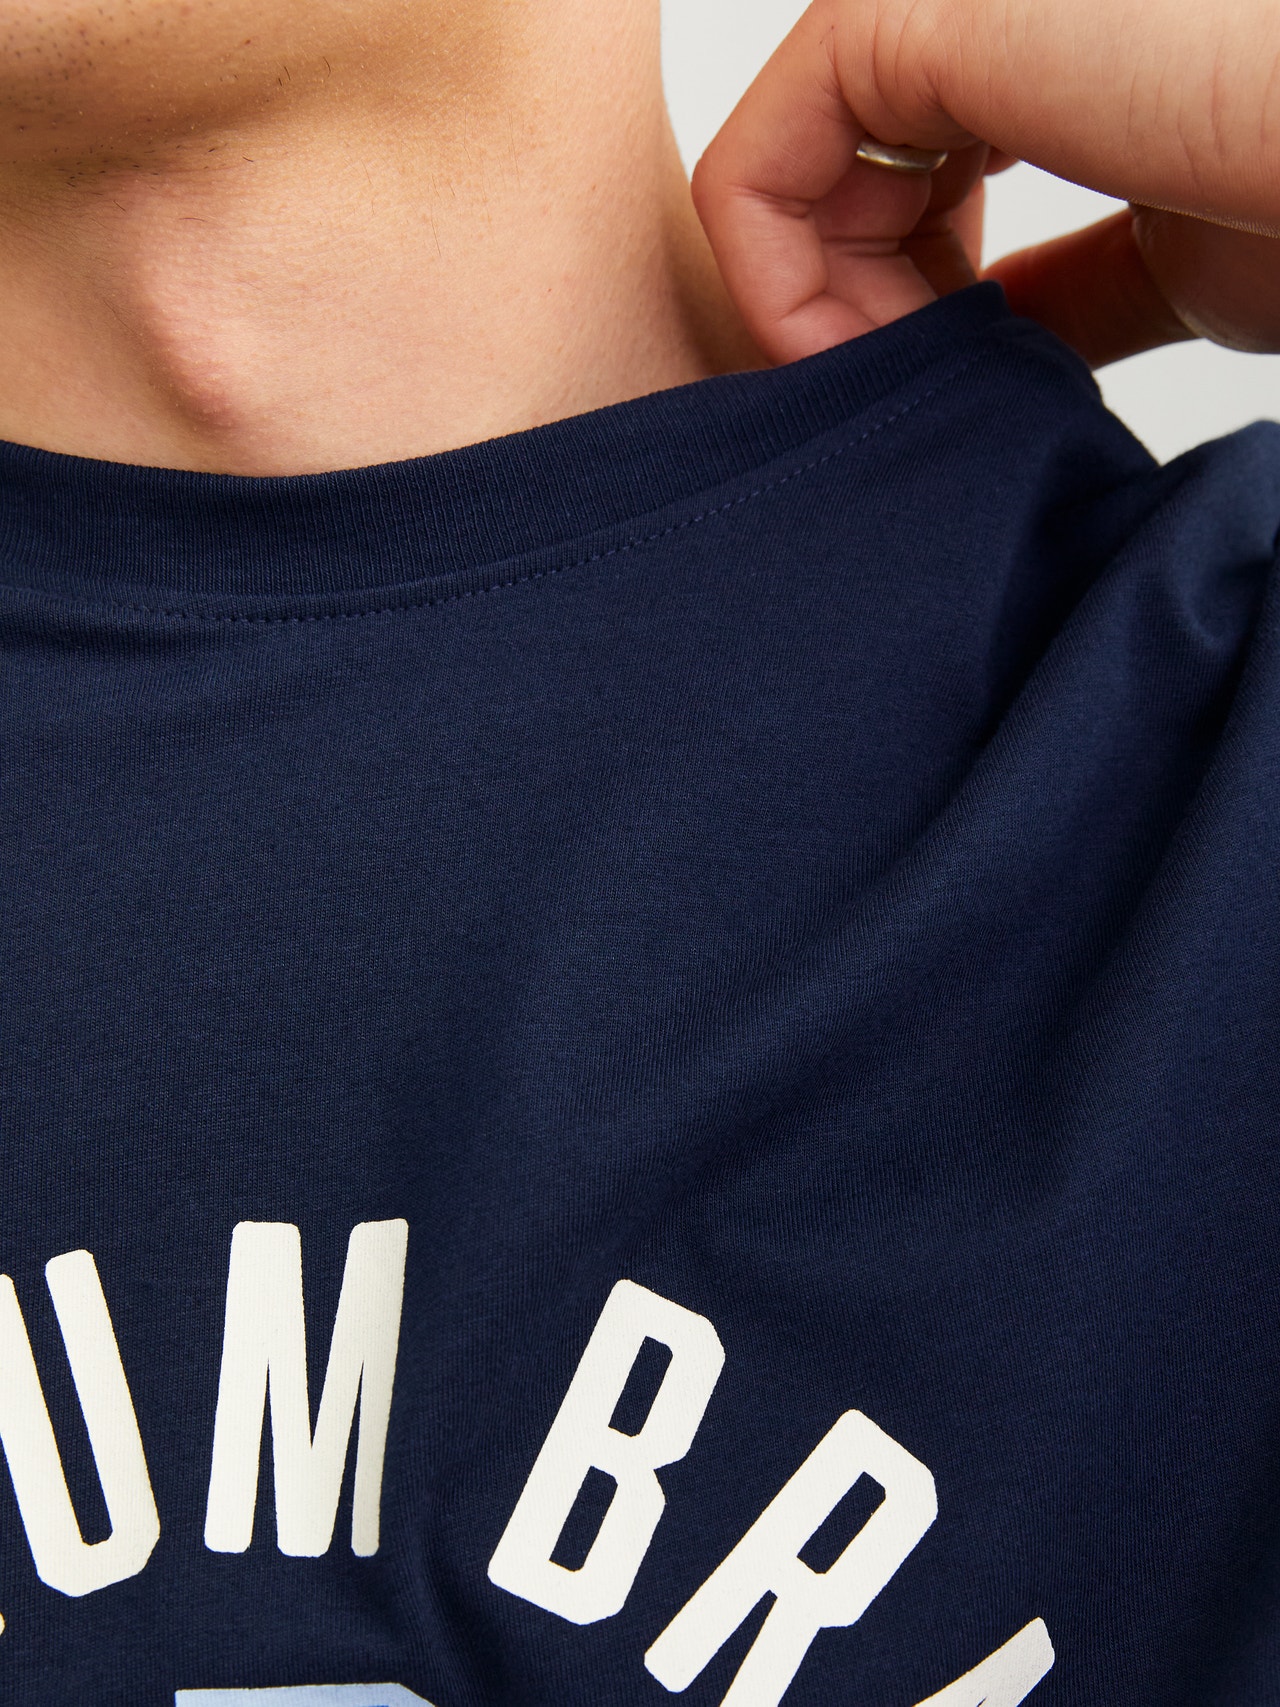 Jack & Jones T-shirt Stampato Girocollo -Navy Blazer - 12255165